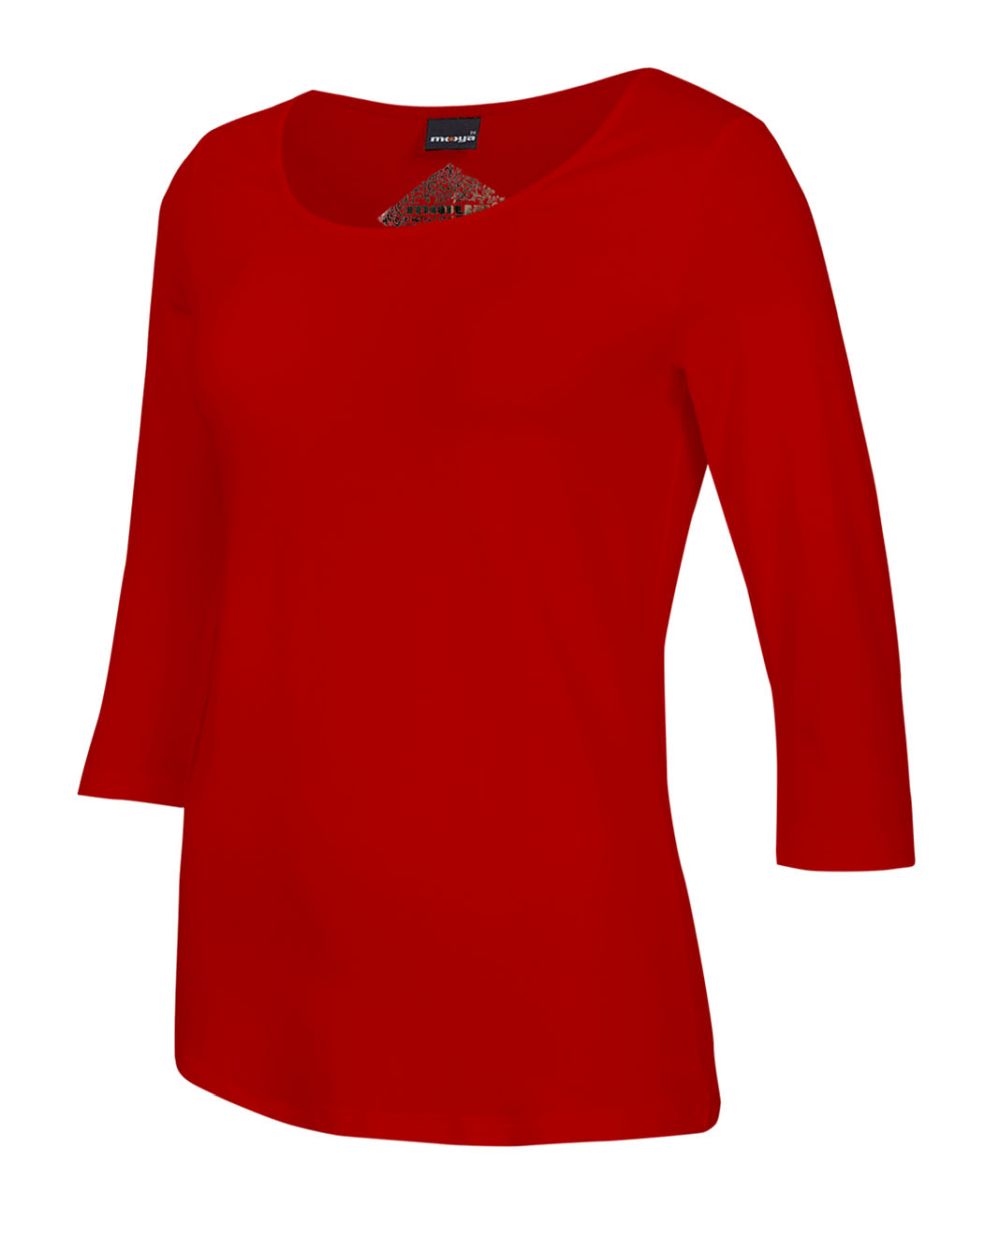 Damen-Shirt Angela, 3/4-Arm, Rundhalsausschnitt, Farbe Red